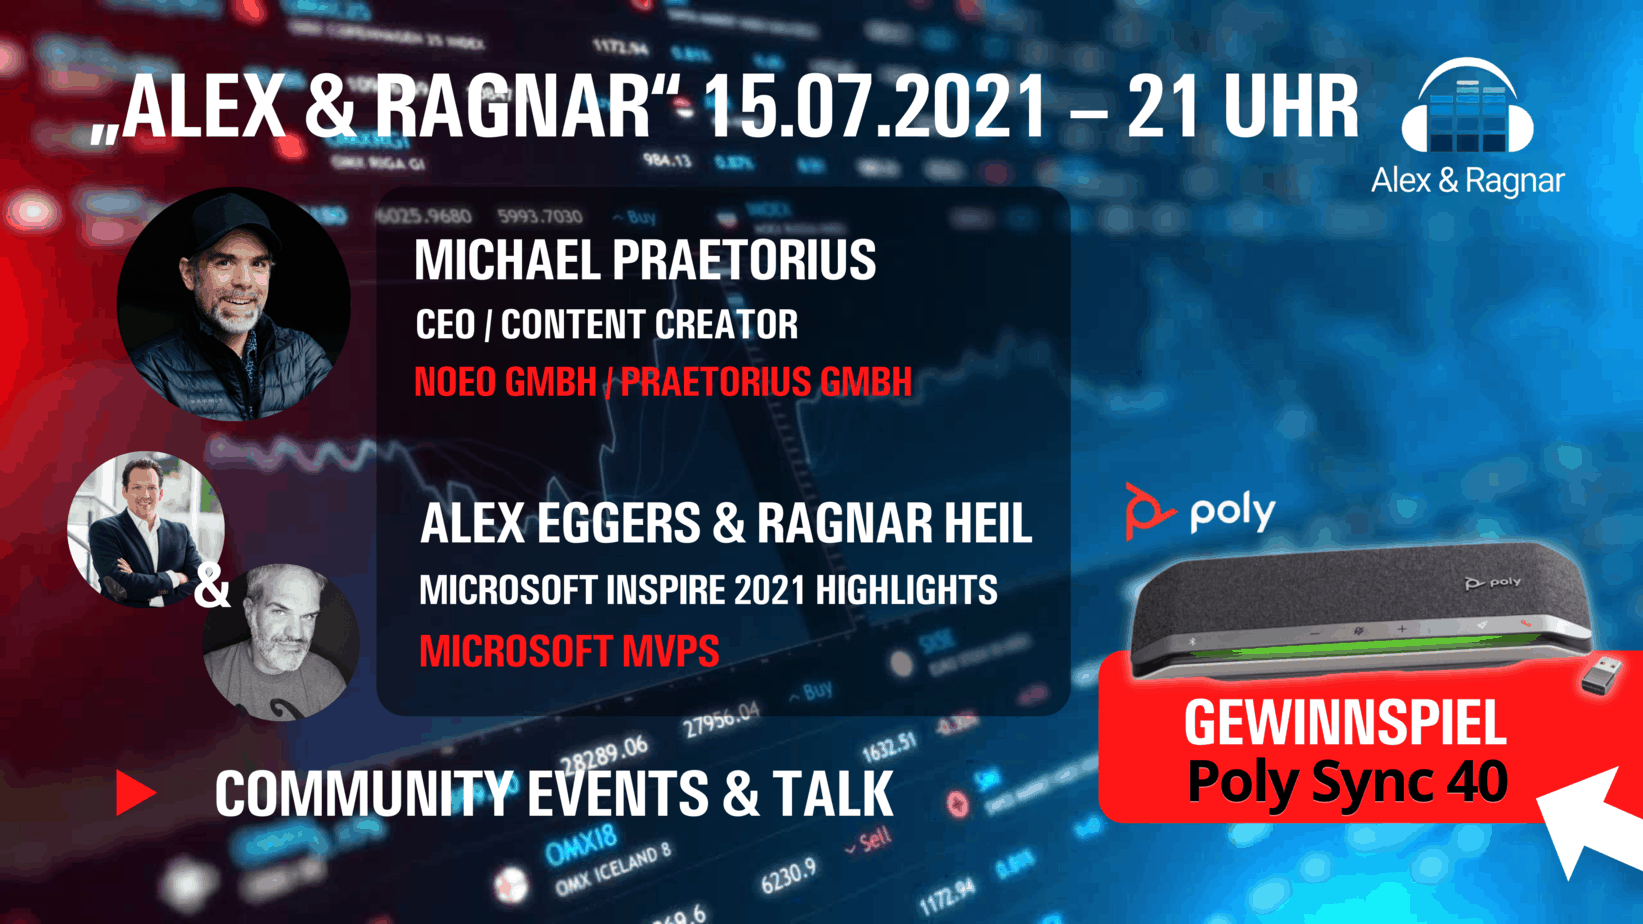 „Alex & Ragnar“ Show 15.07.2021#47 mit Michael Praetorius und Microsoft Inspire Highlights